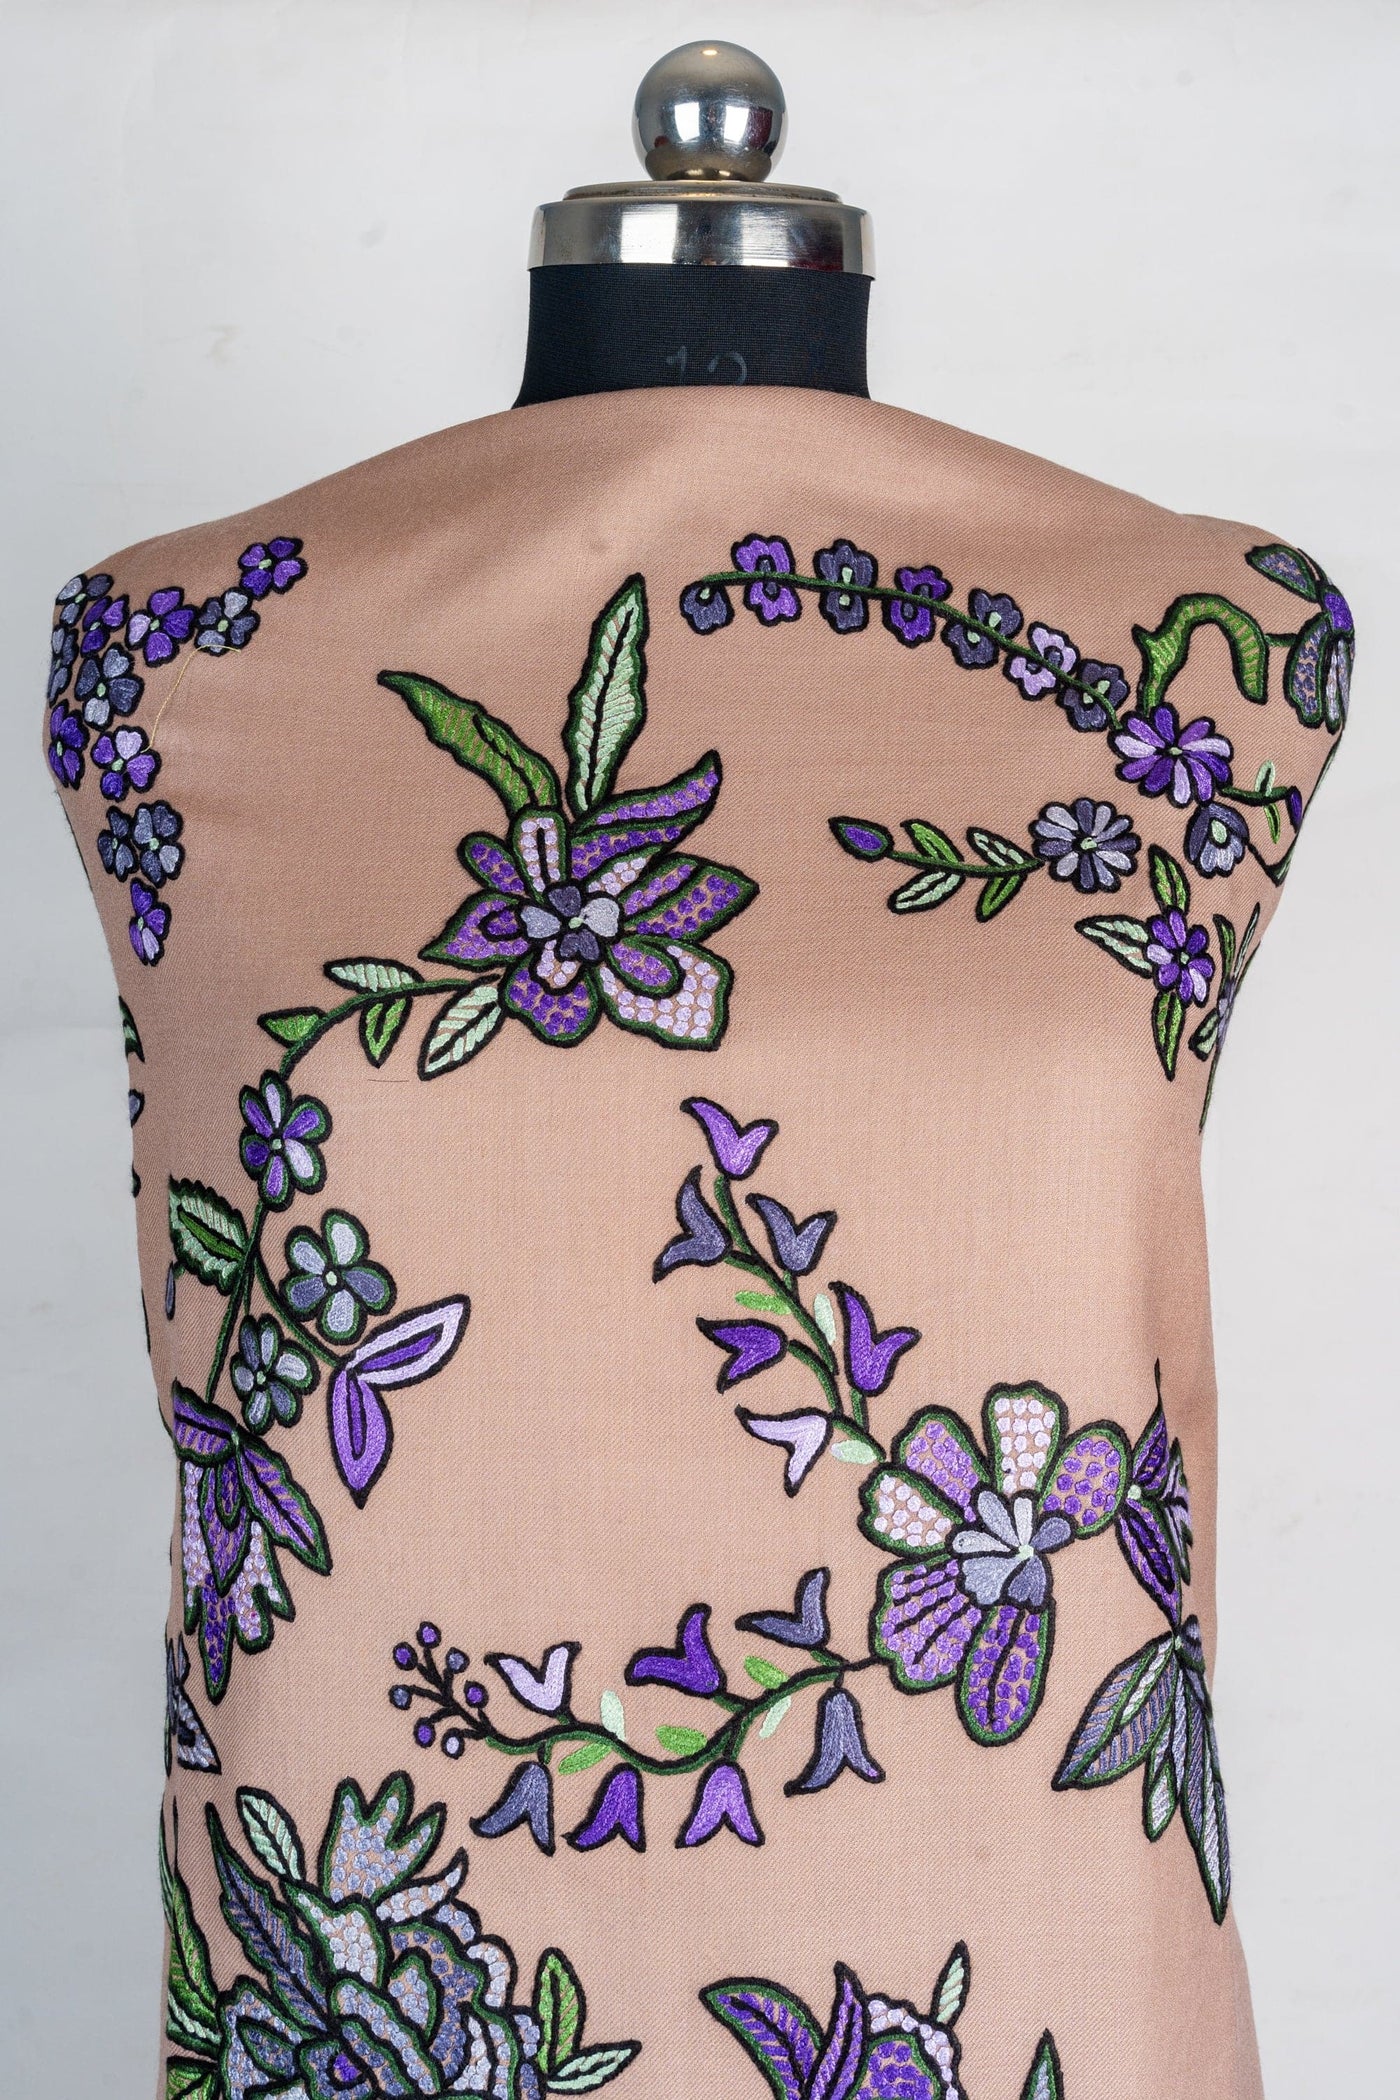 Fajr-e-Aari: Kashmiri Hand Embroidered Beige Suit with Hand Aari Embroidery